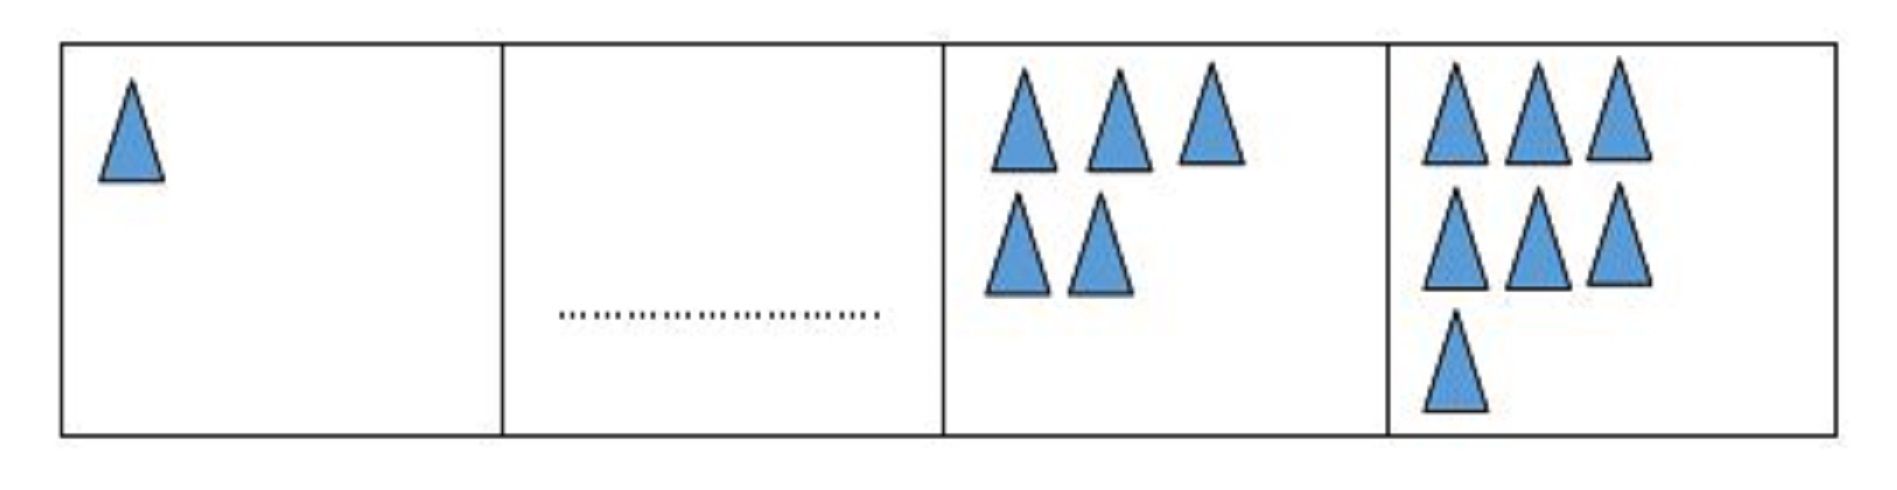 Lengkapilah pola segitiga berikut!